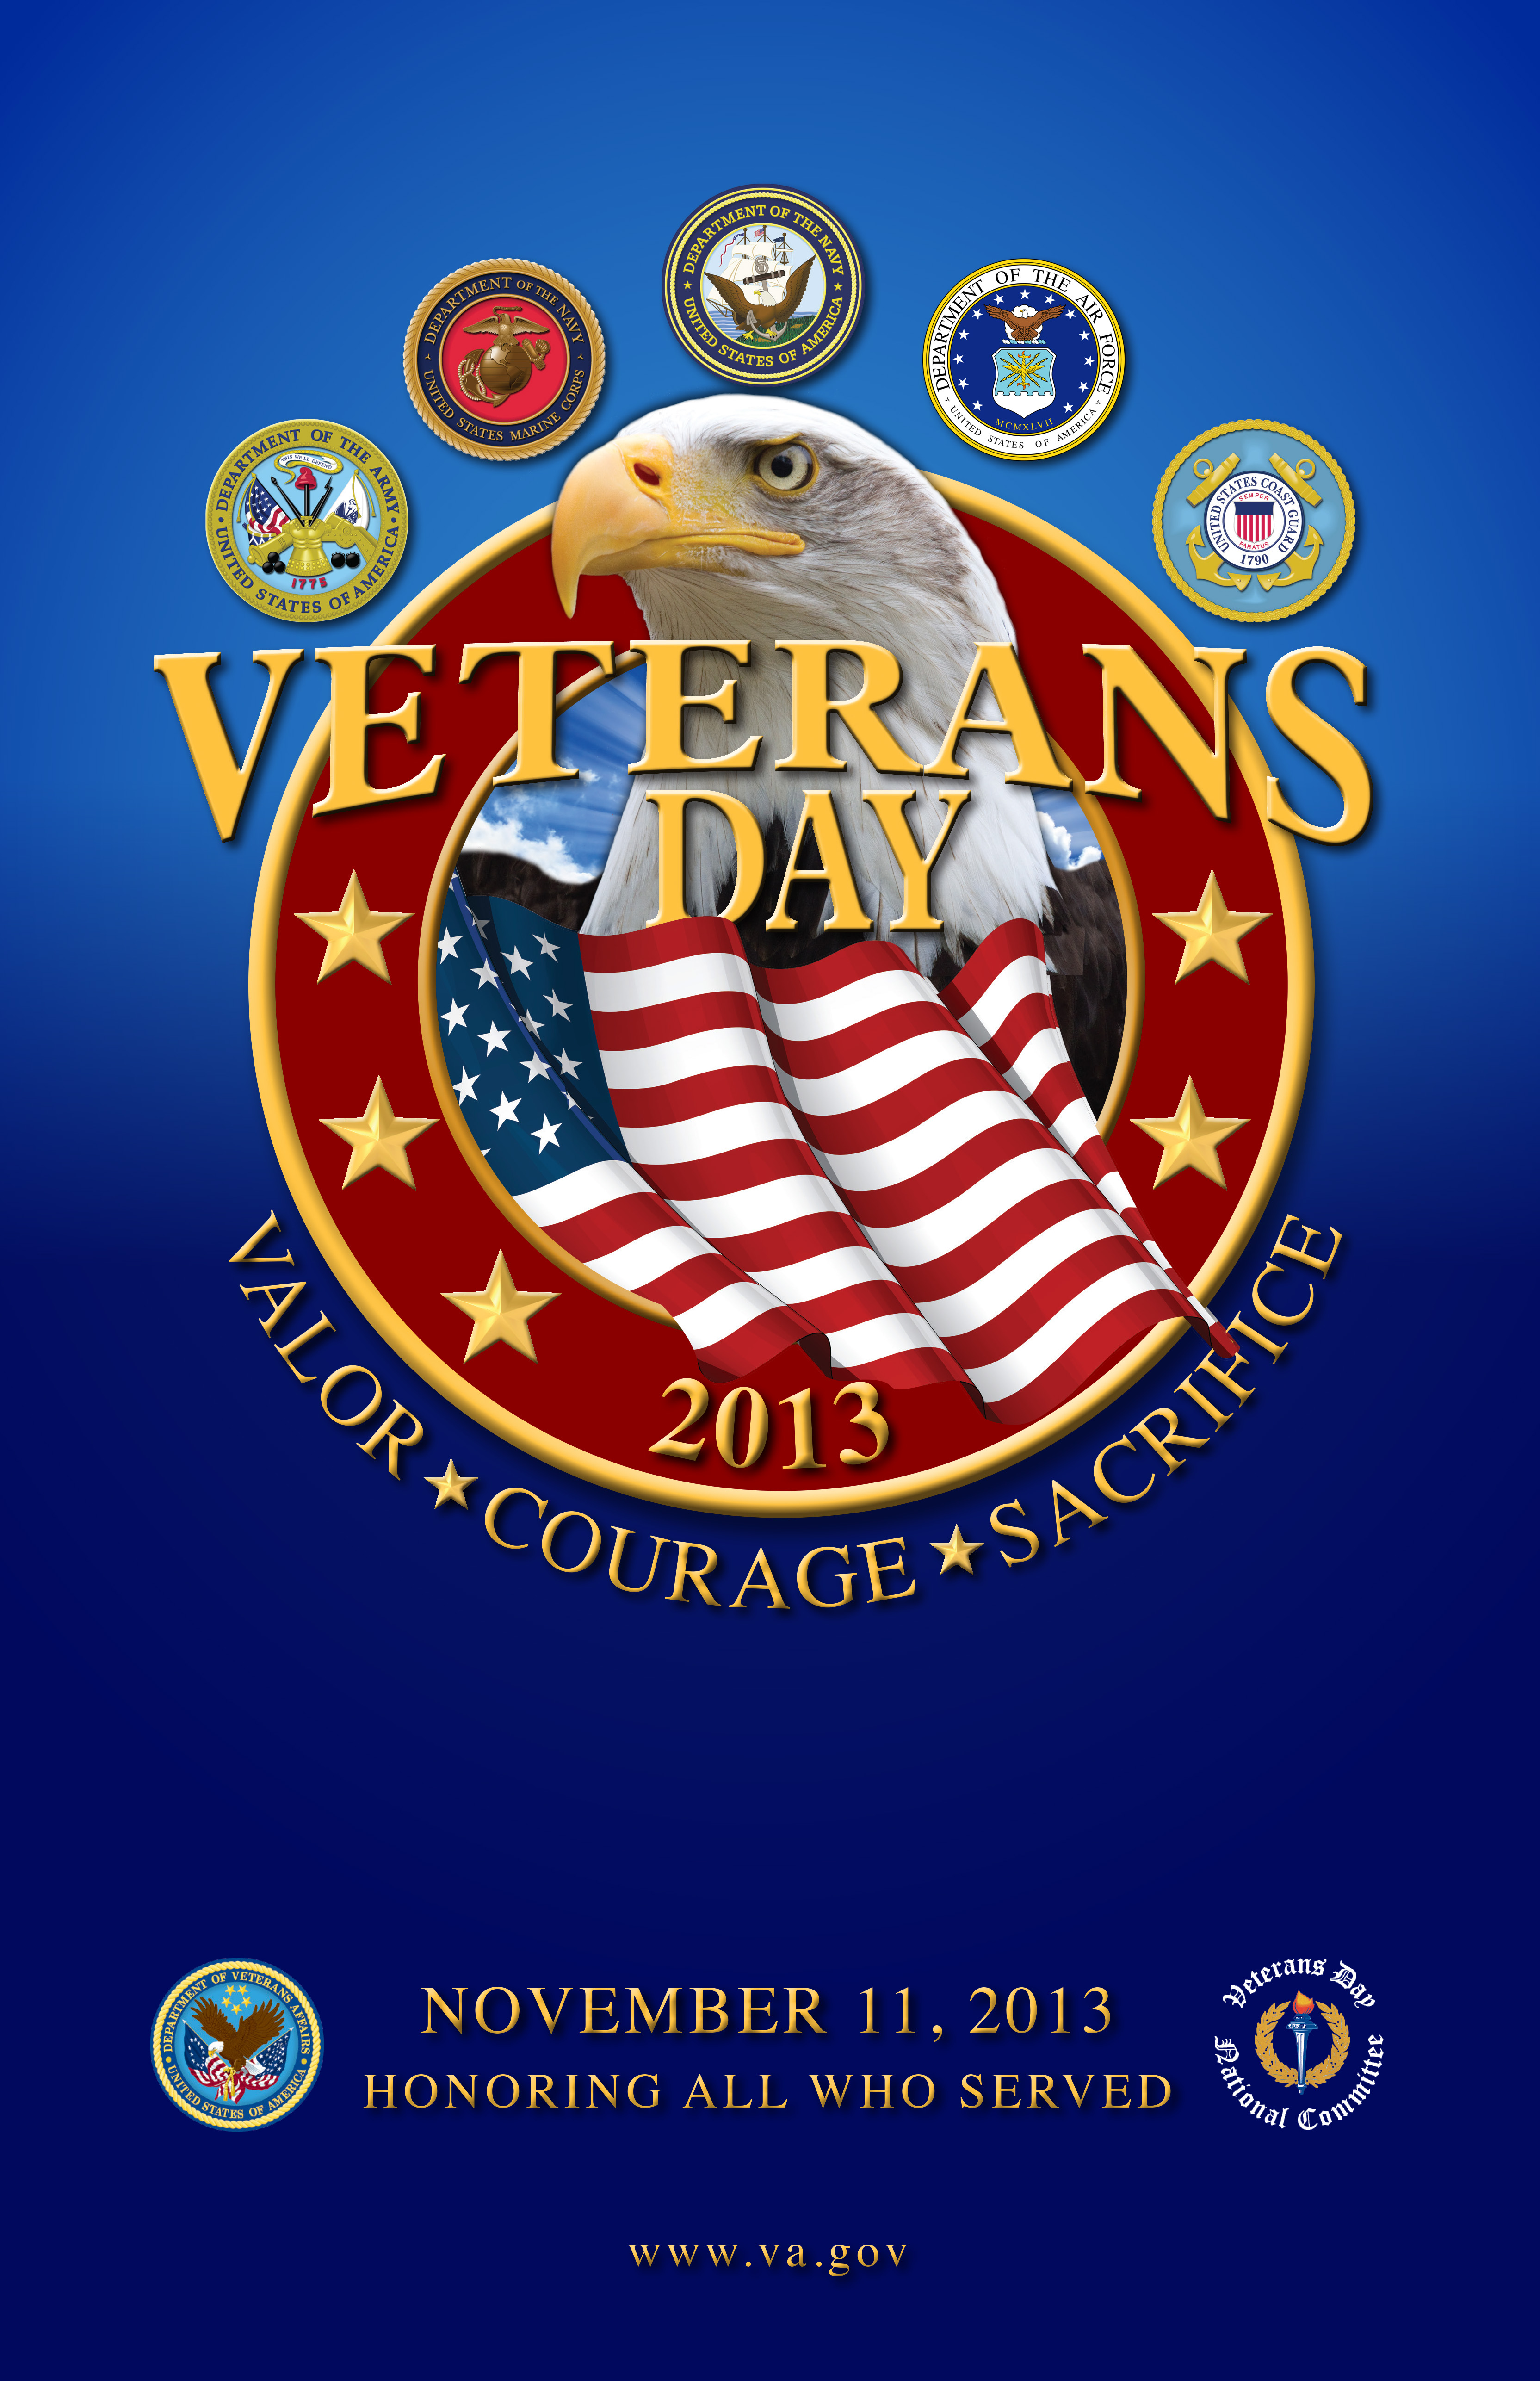 Veterans Day 2015 Wallpapers